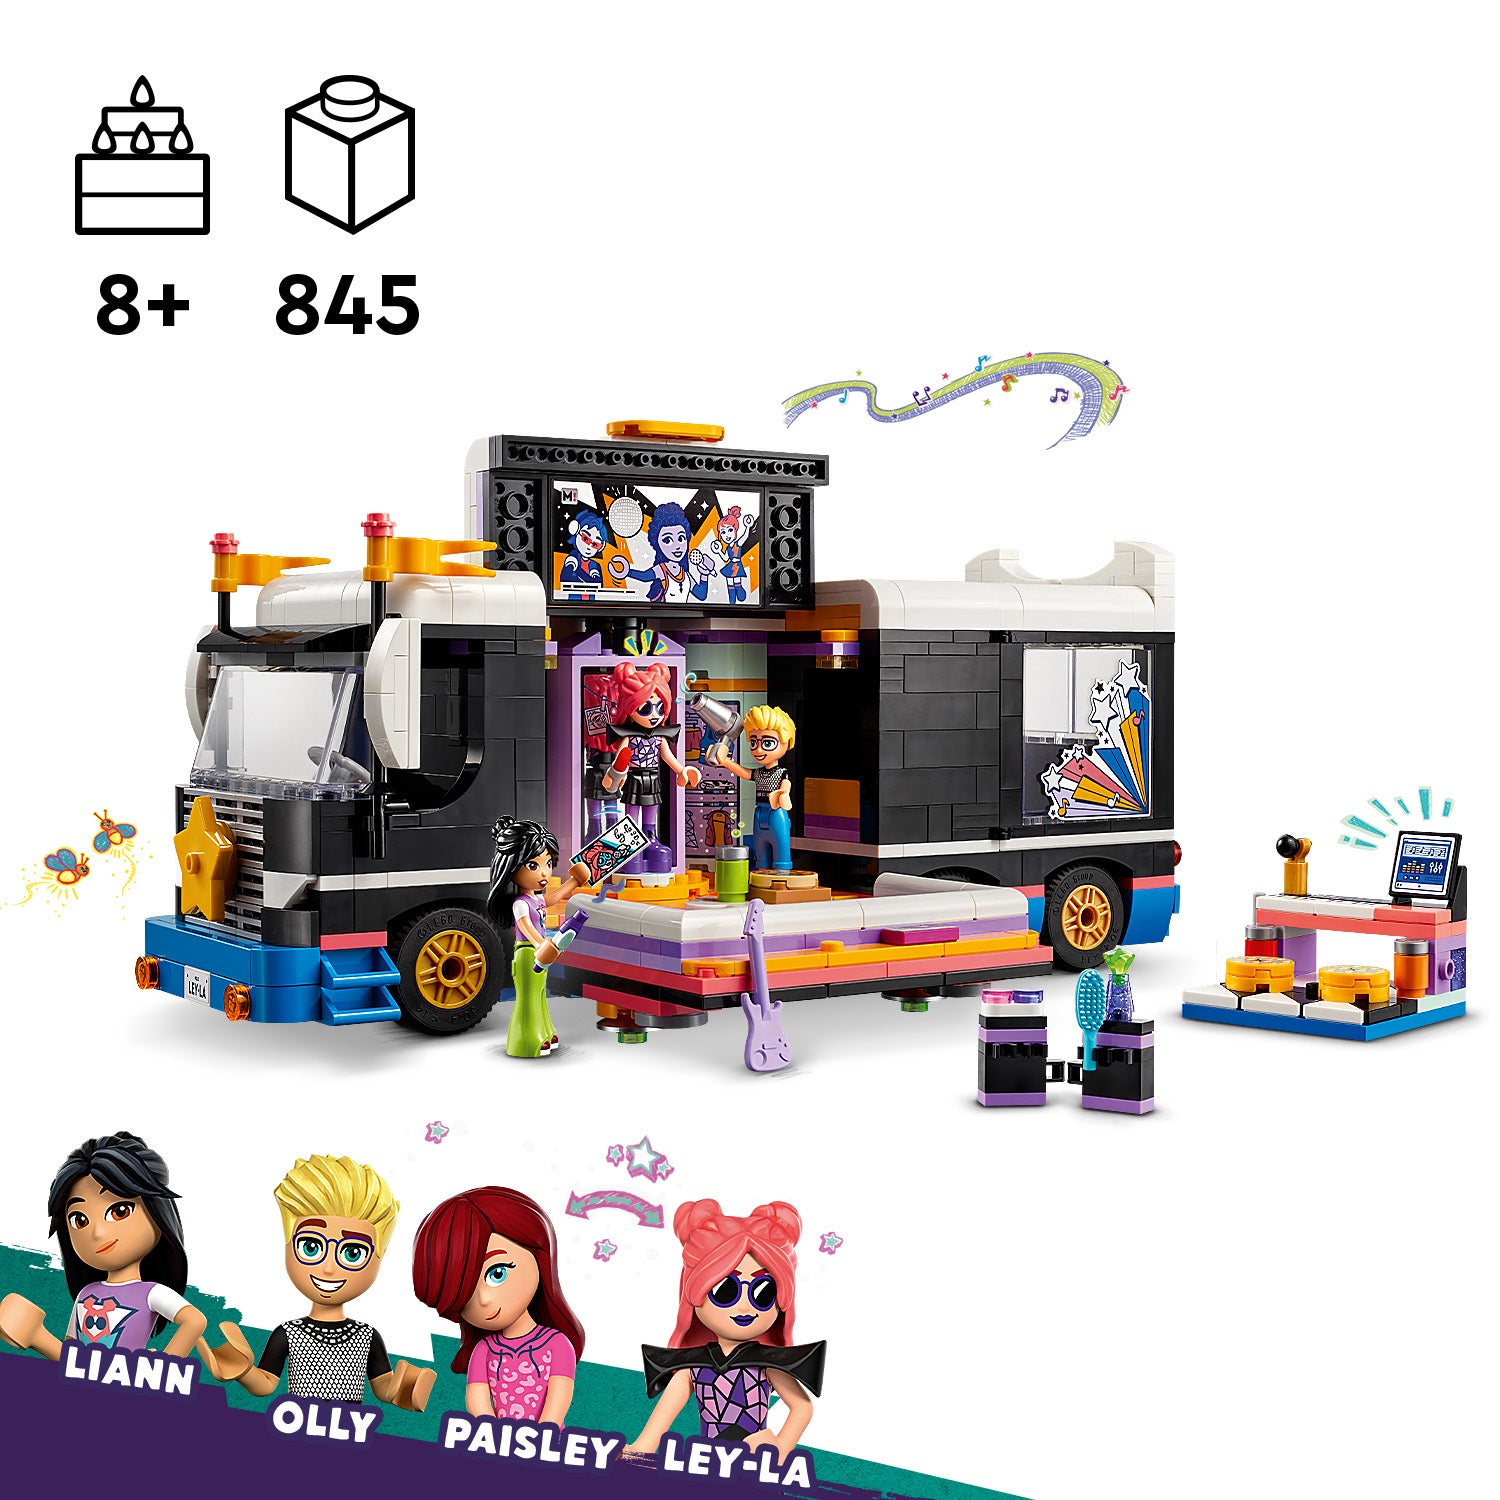 Lego 42619 Pop Star Music Tour Bus